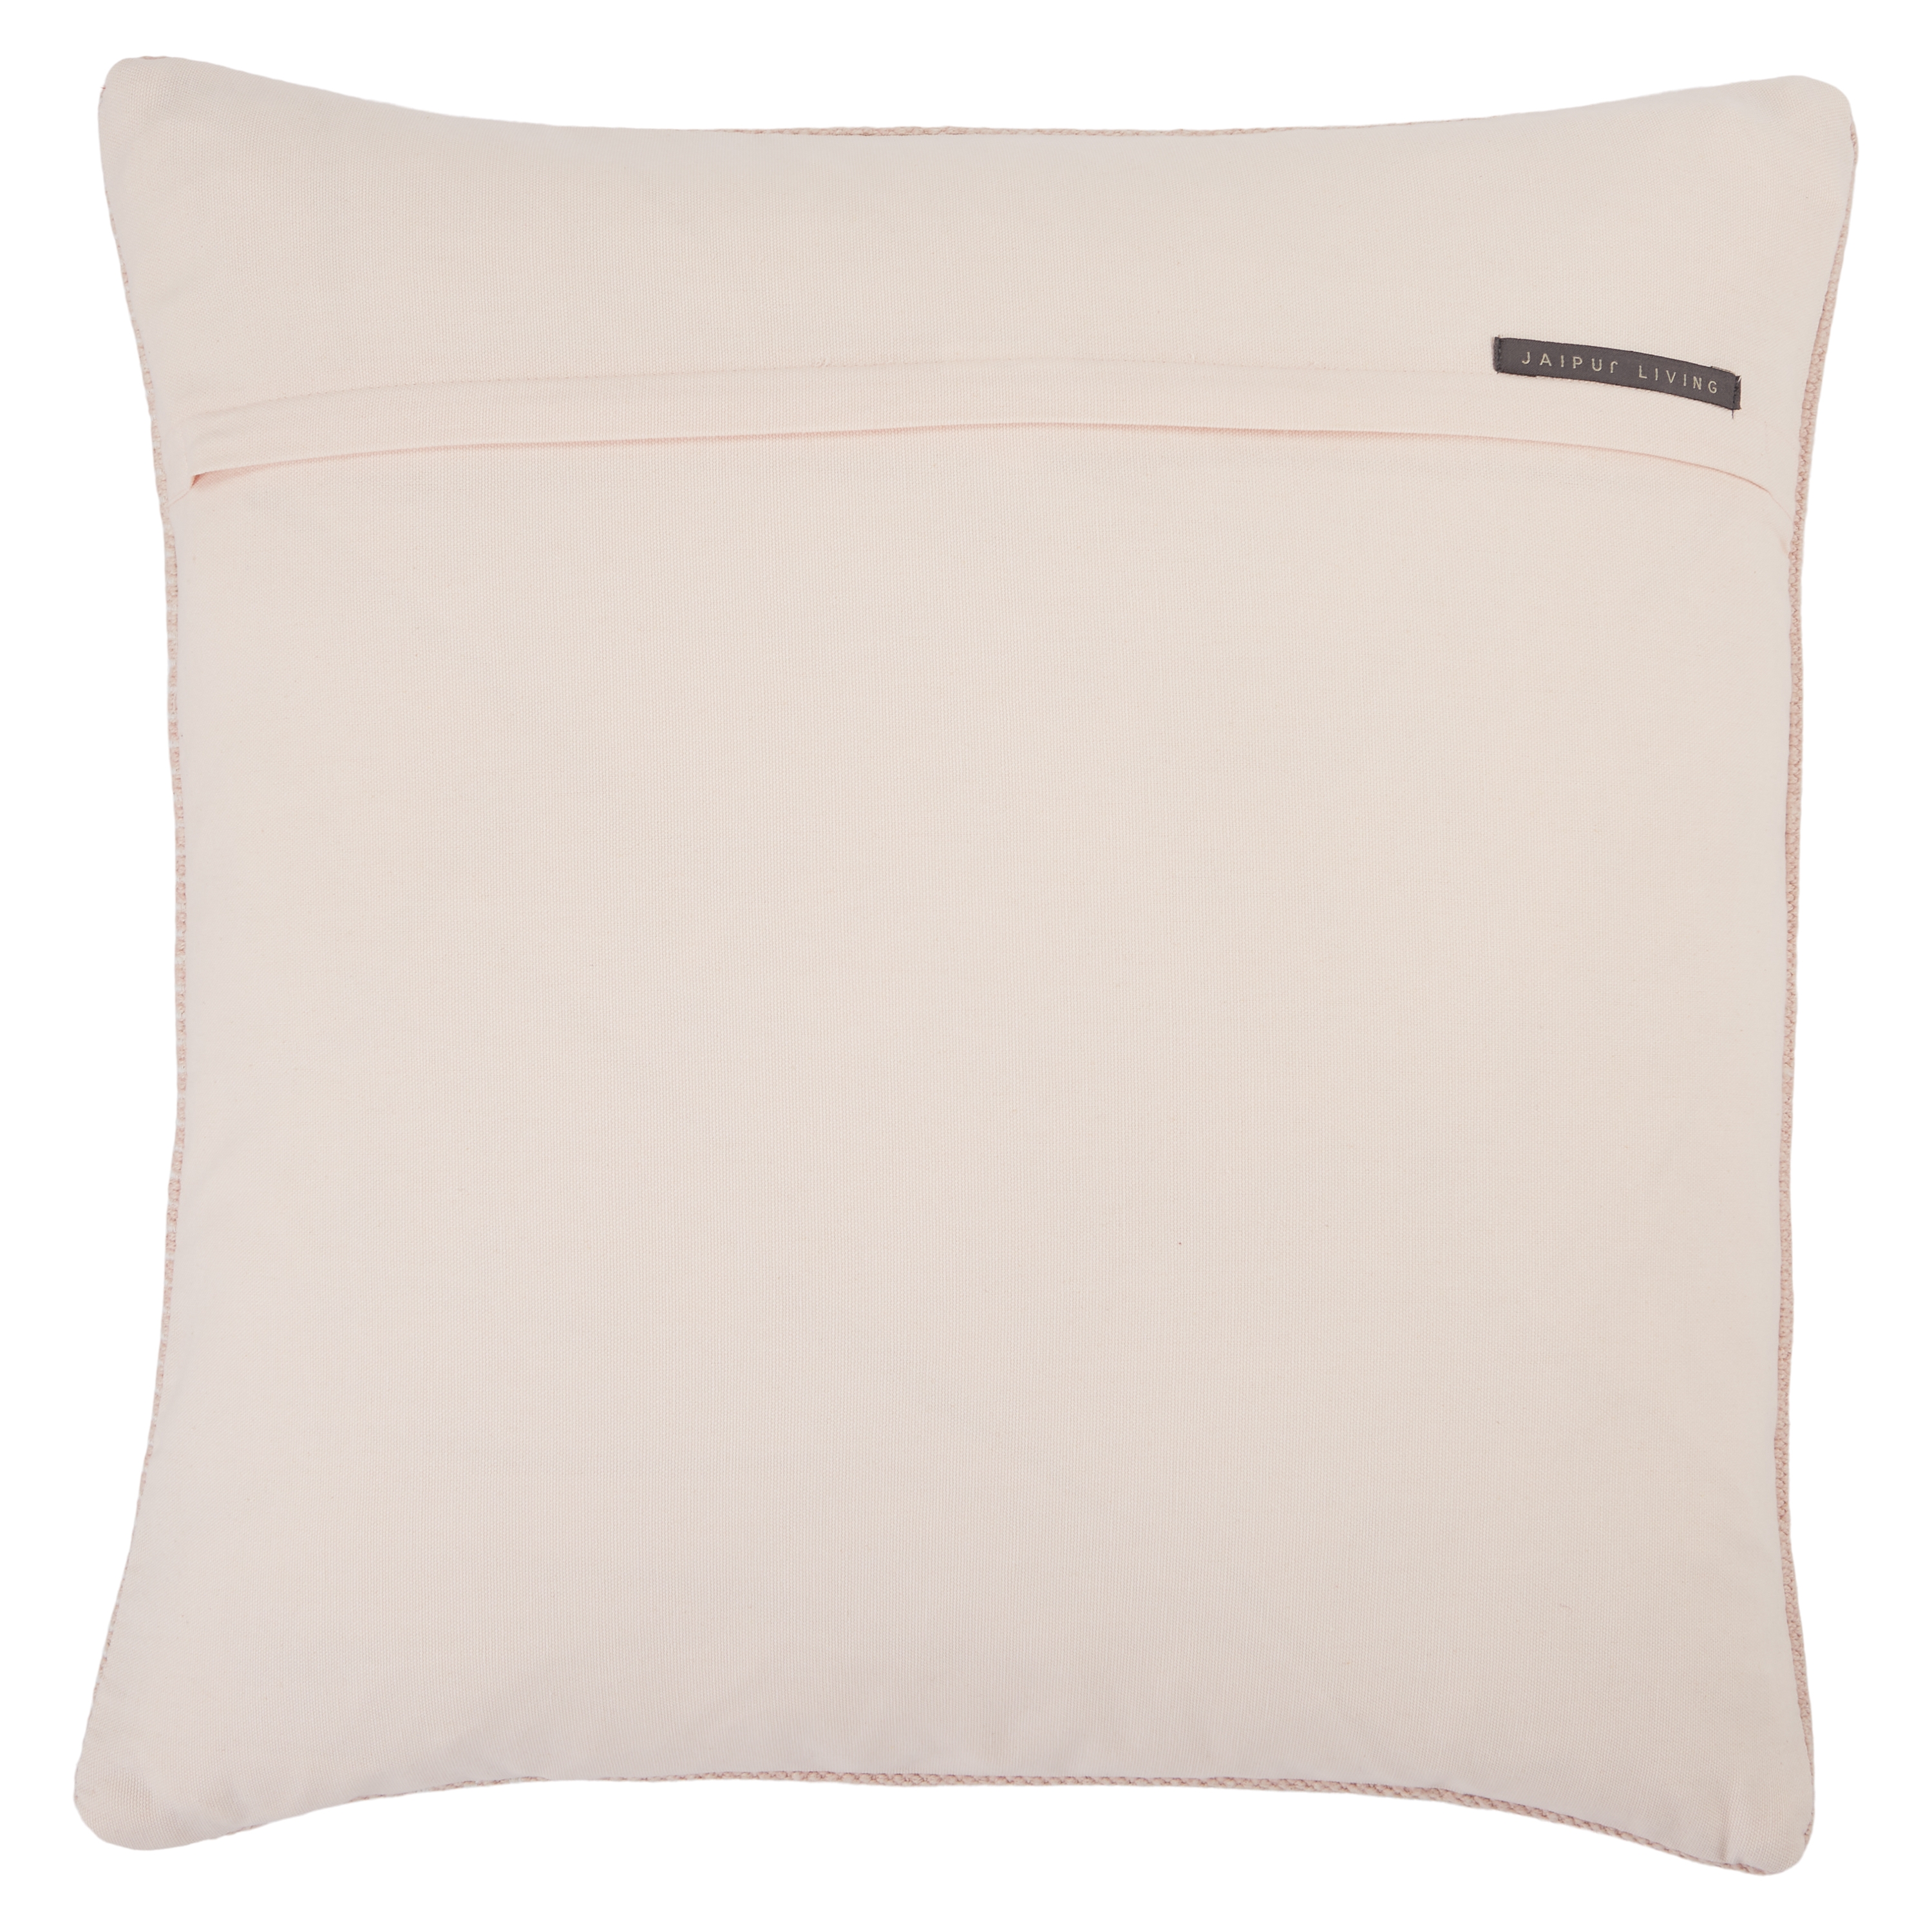 Design (US) Blush 22"X22" Pillow - Image 1